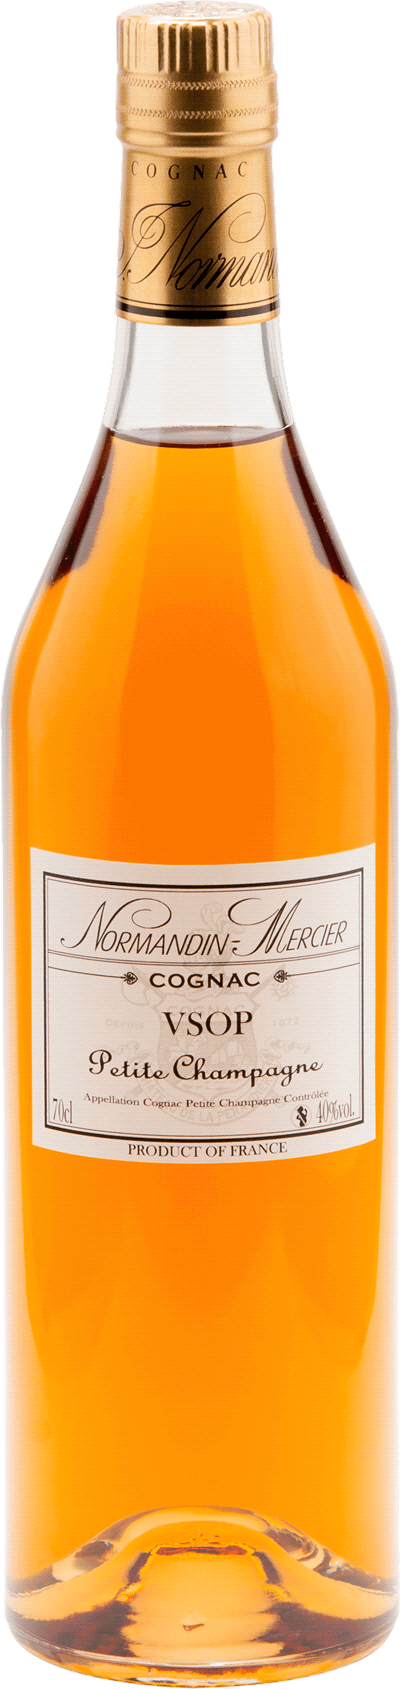 Normandin Mercier Petite Champagne VSOP